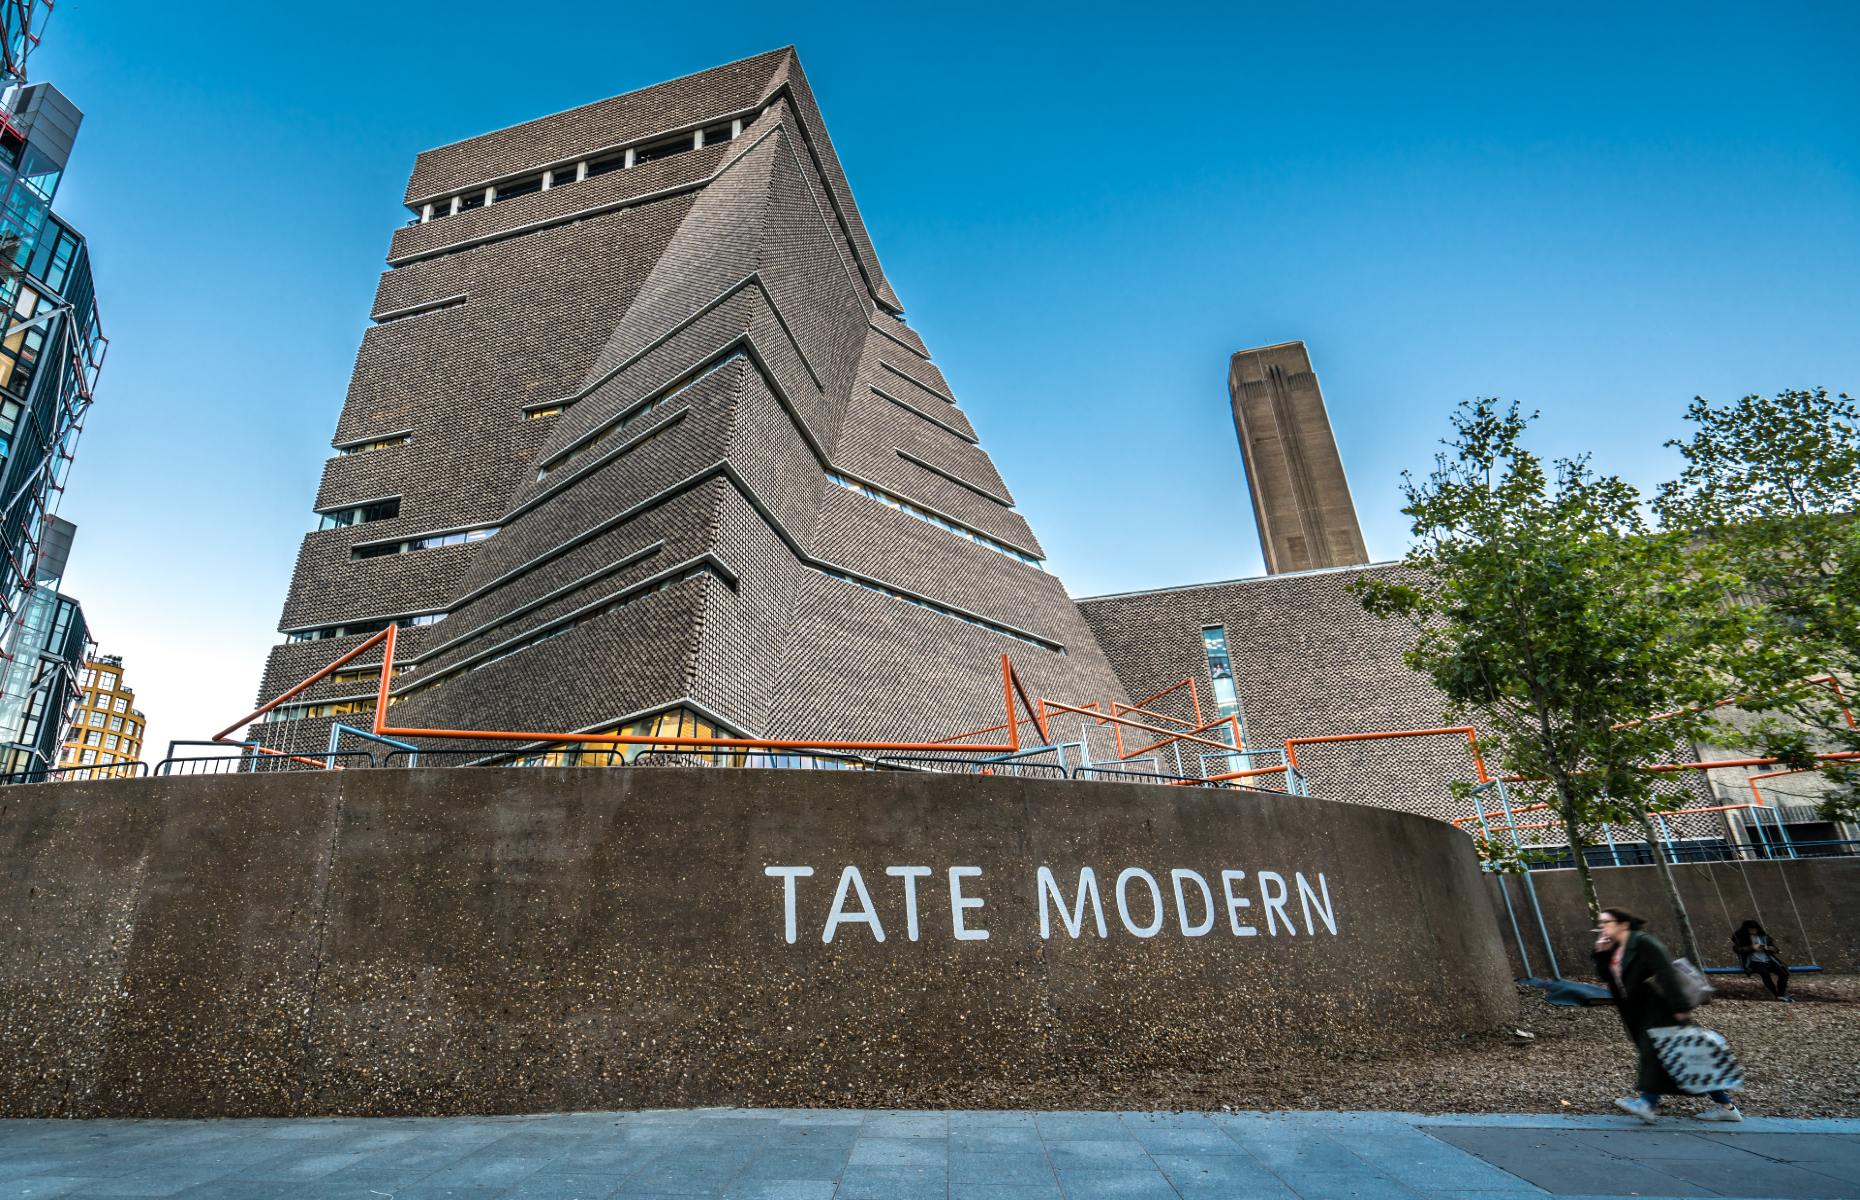 Tate Modern exterior (Image: NoyanYalcin/Shutterstock)